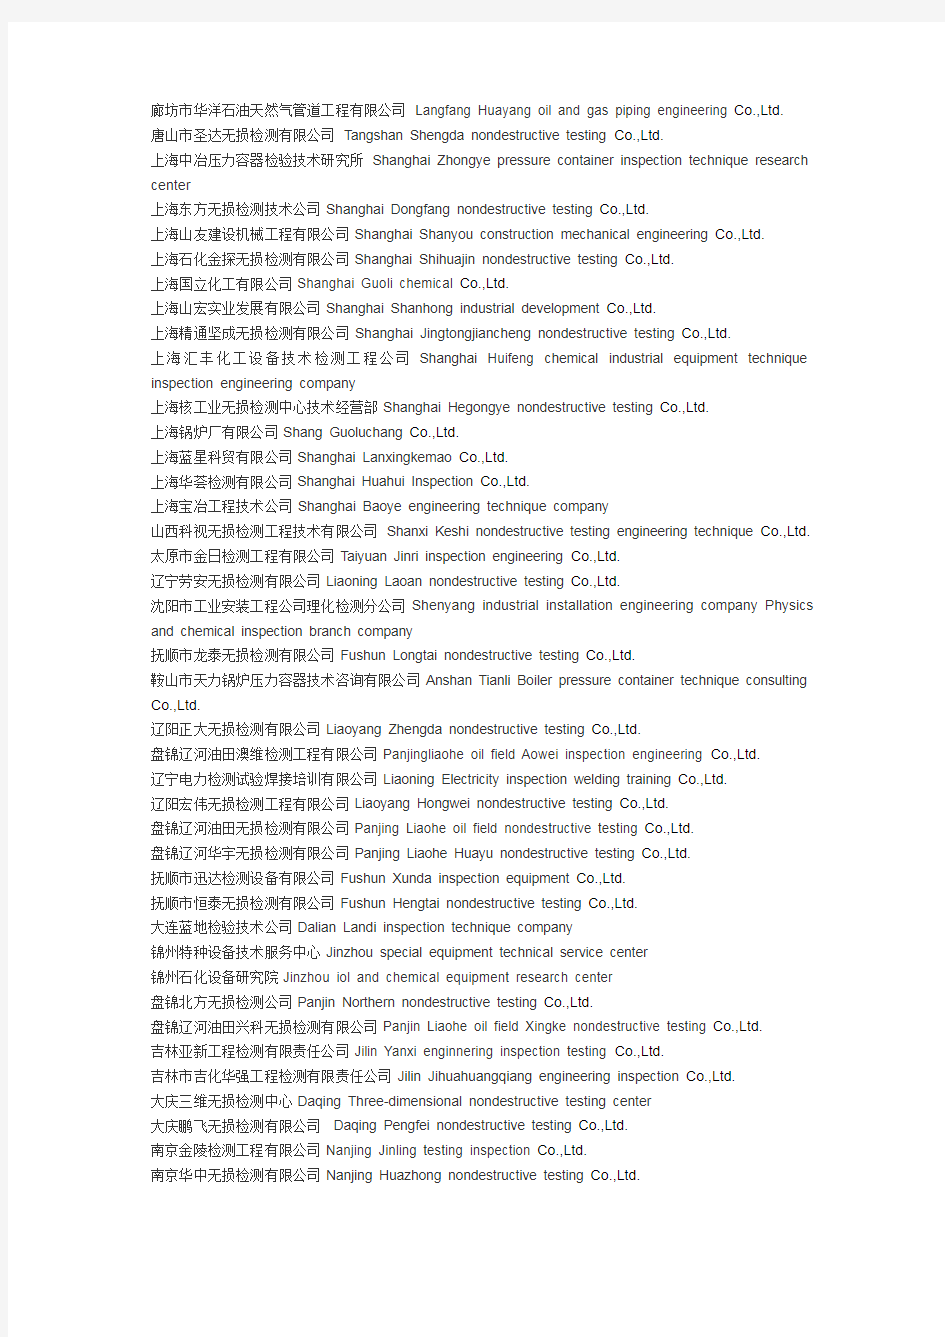 Translated-2015最新全国有资质无损检测机构名录China NDE Contractor List in 2015